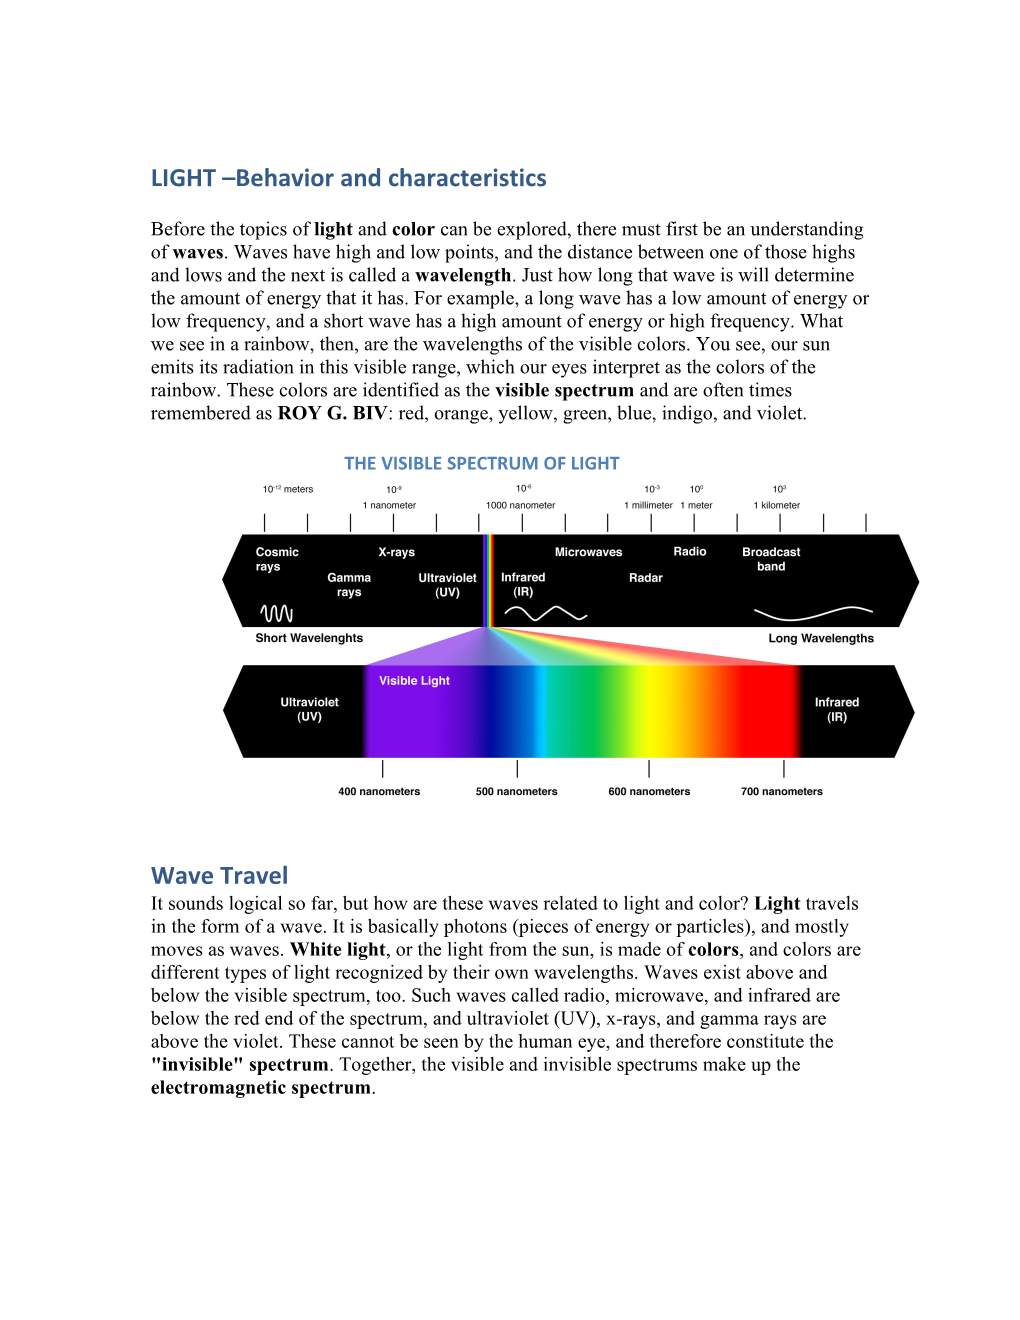 LIGHT Behavior and Characteristics